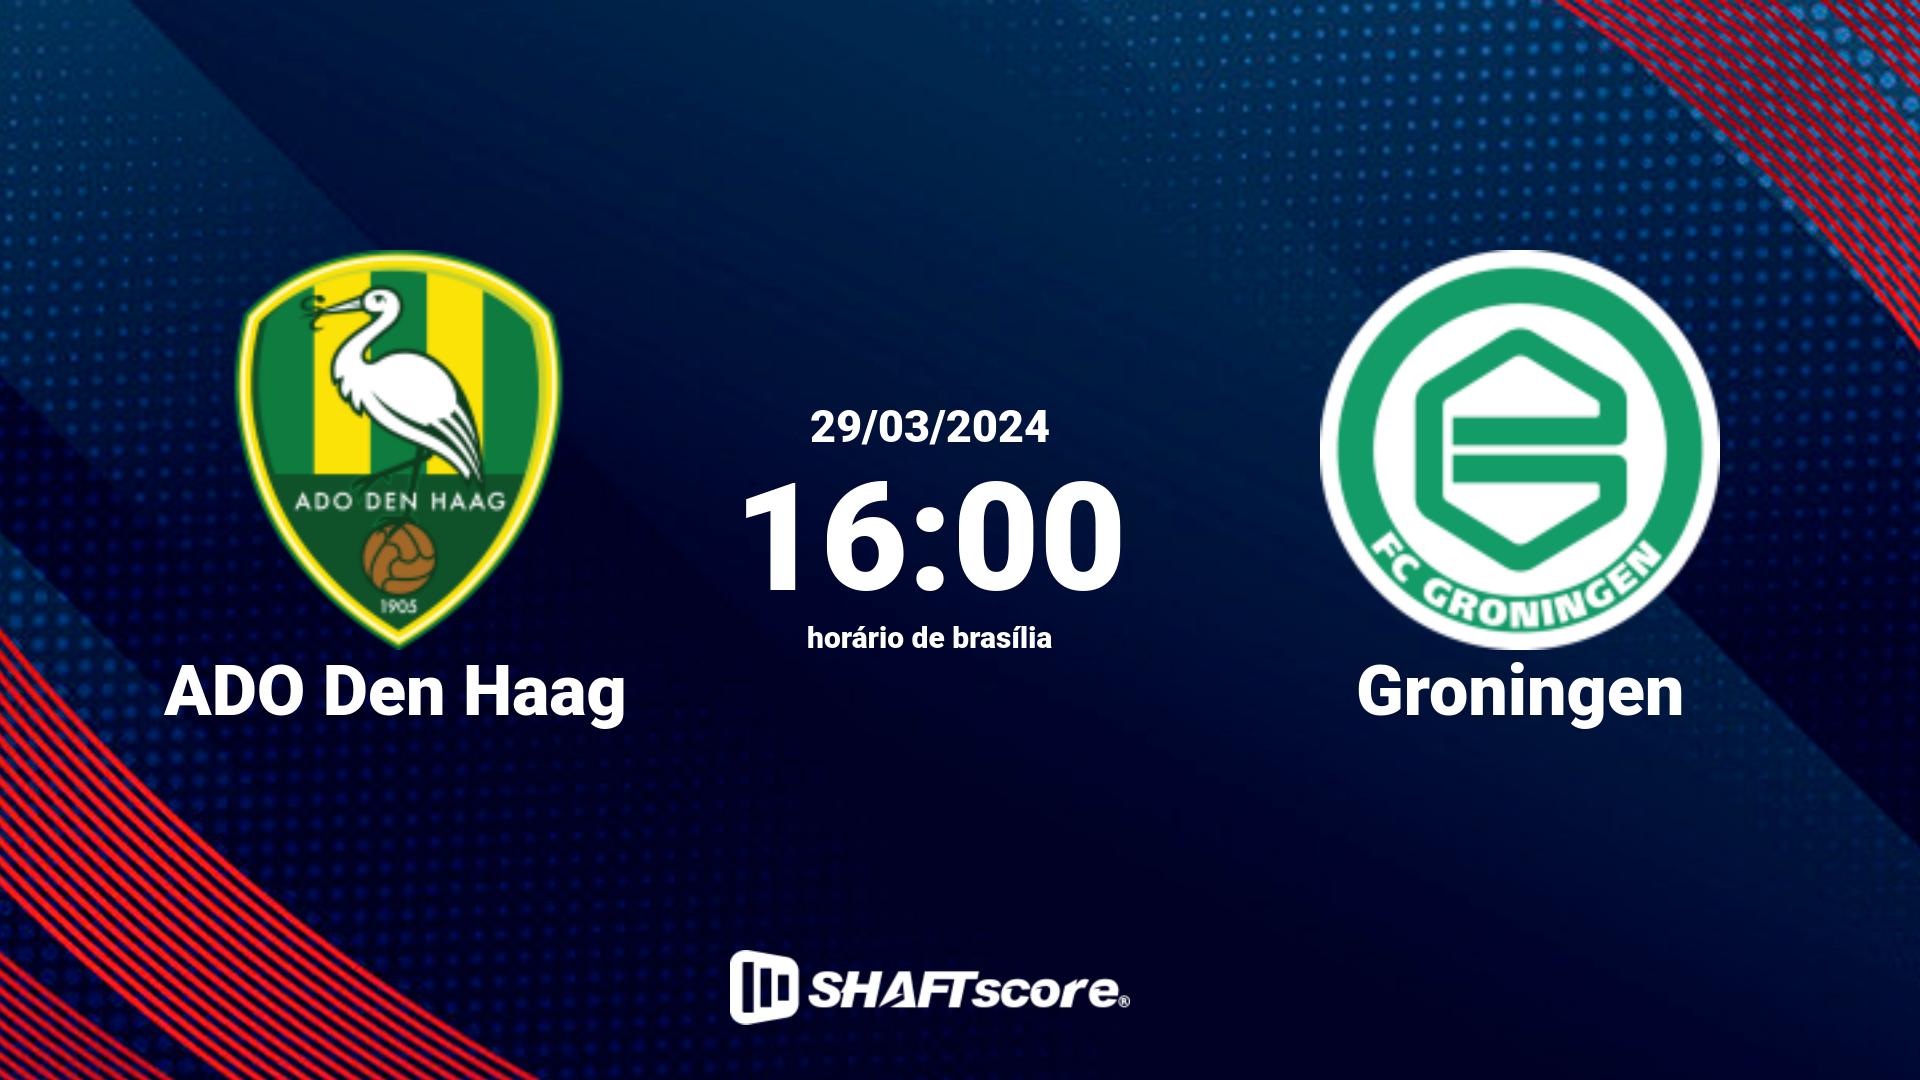 Estatísticas do jogo ADO Den Haag vs Groningen 29.03 16:00